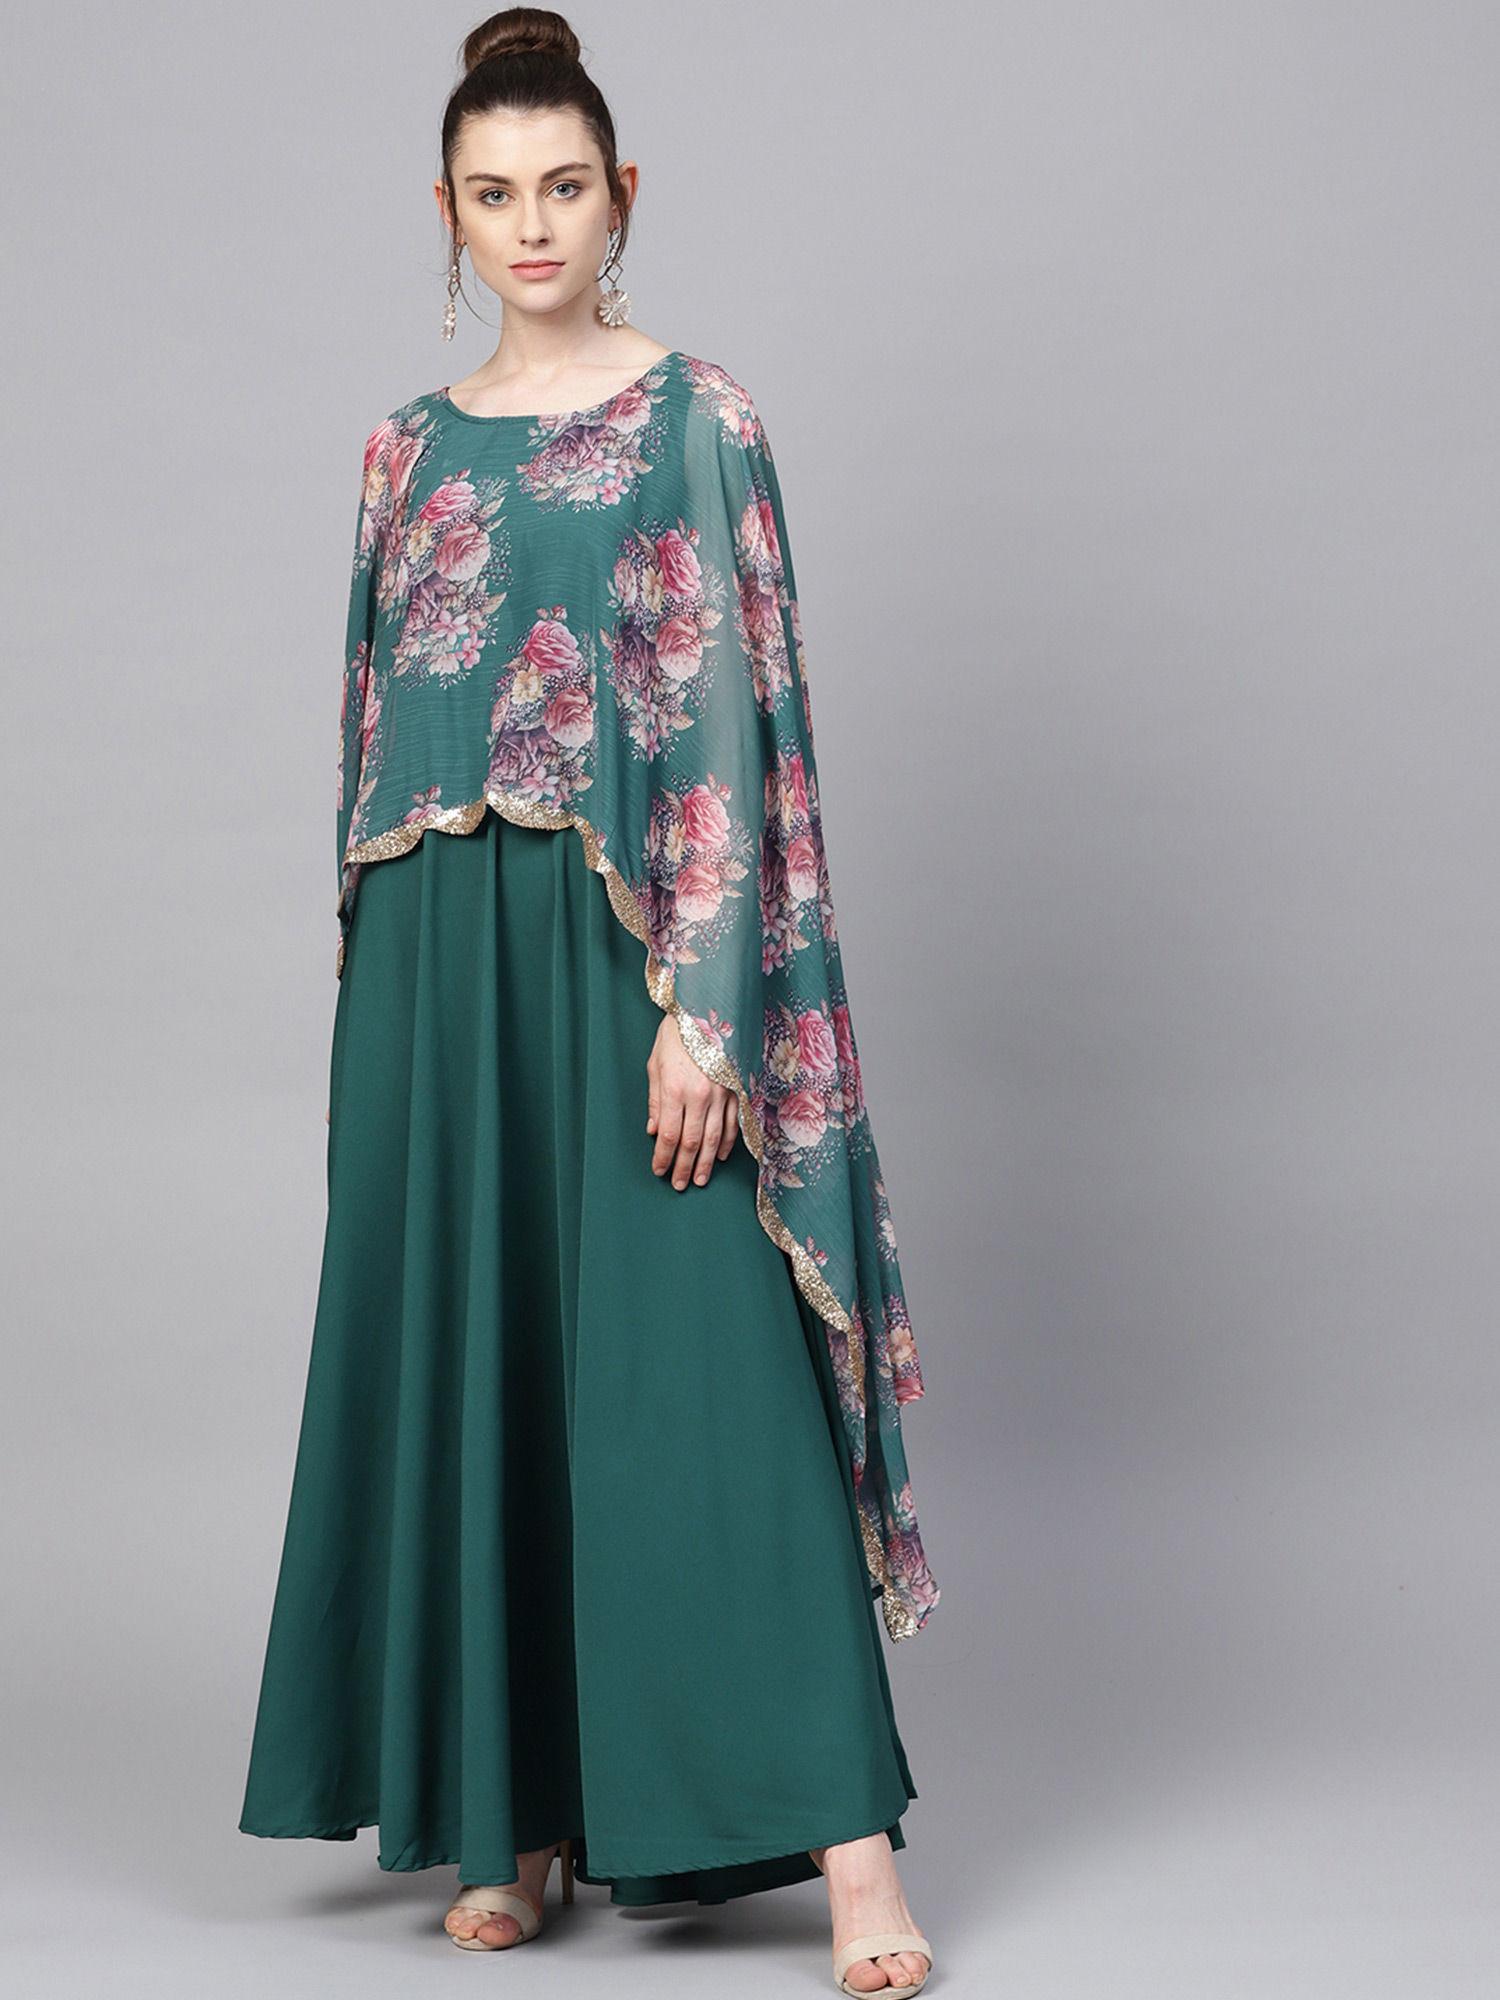 sea green floral cape style kurta dress